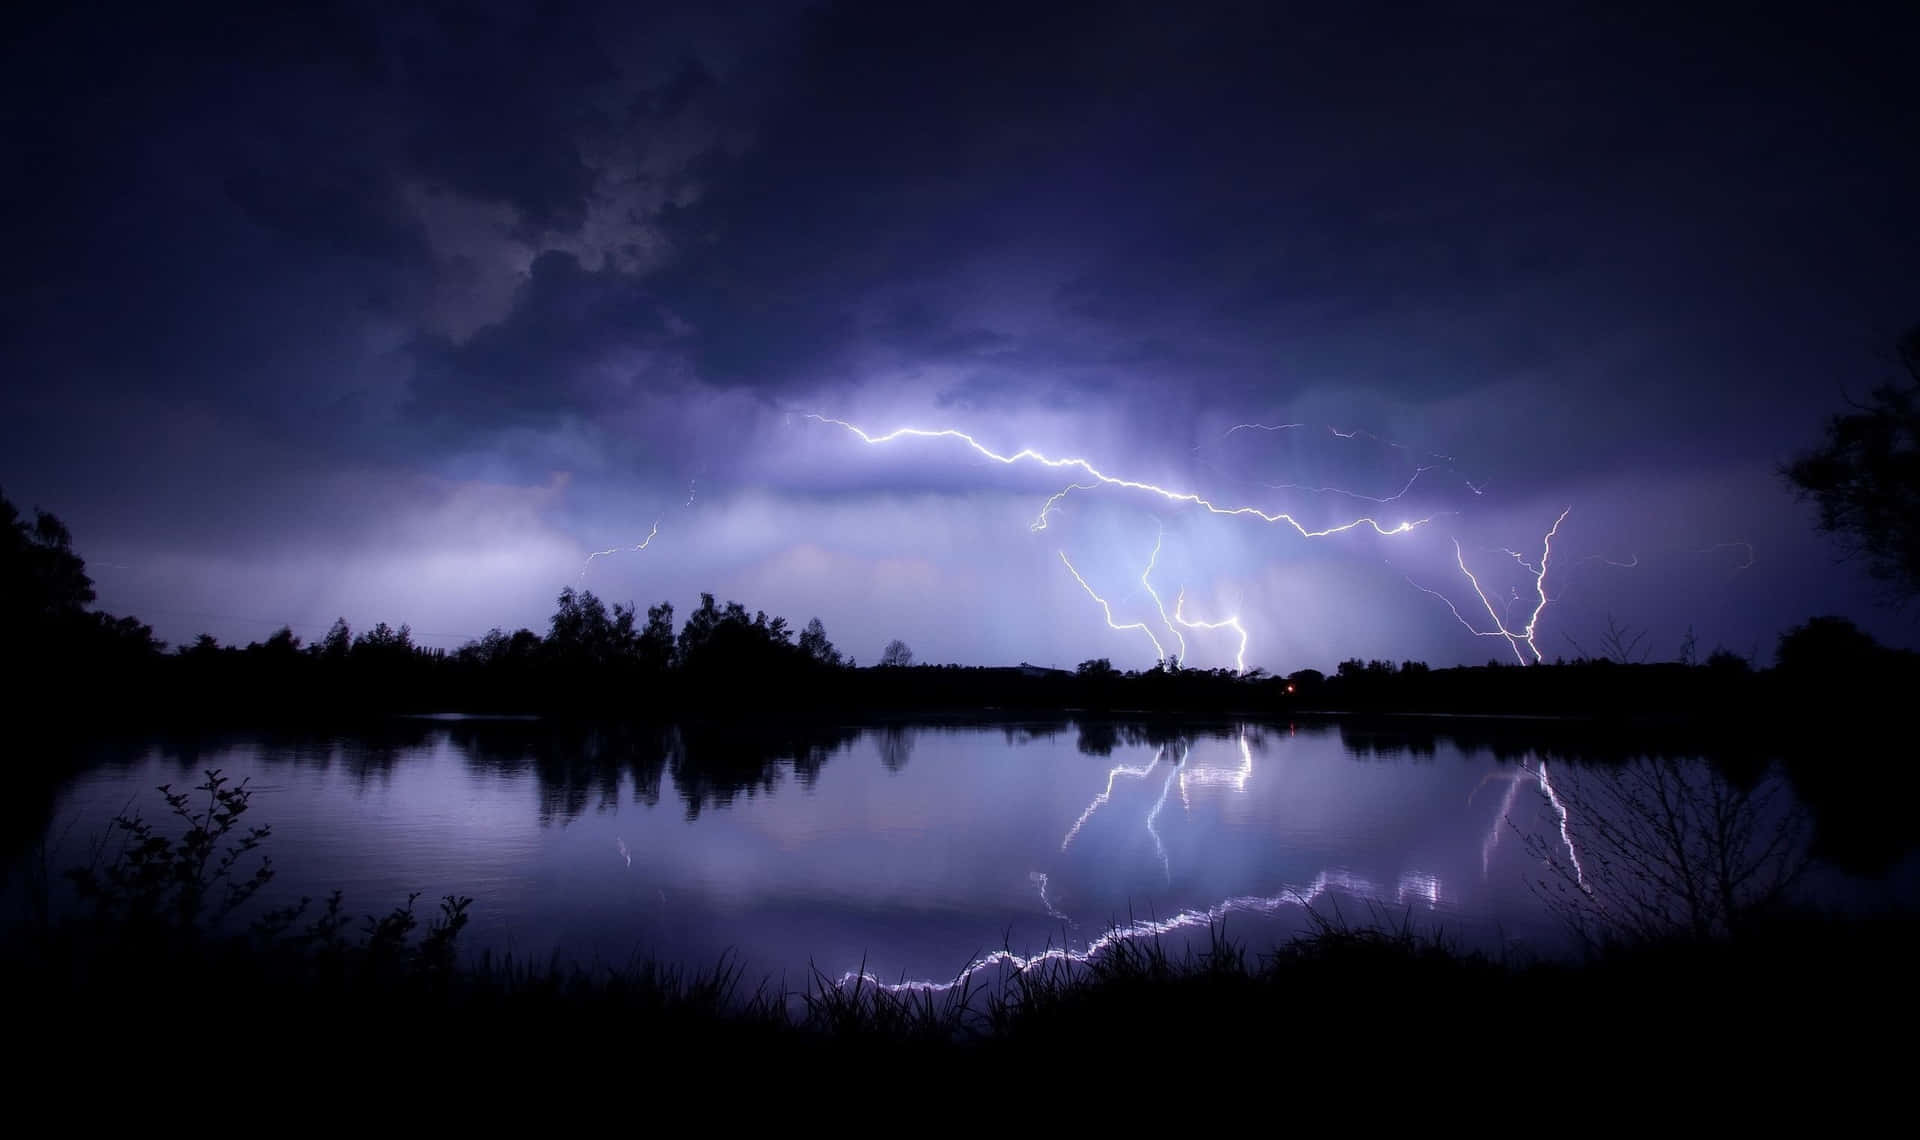 Bright Lightning Bolt Strikes Above a Stormy Sky